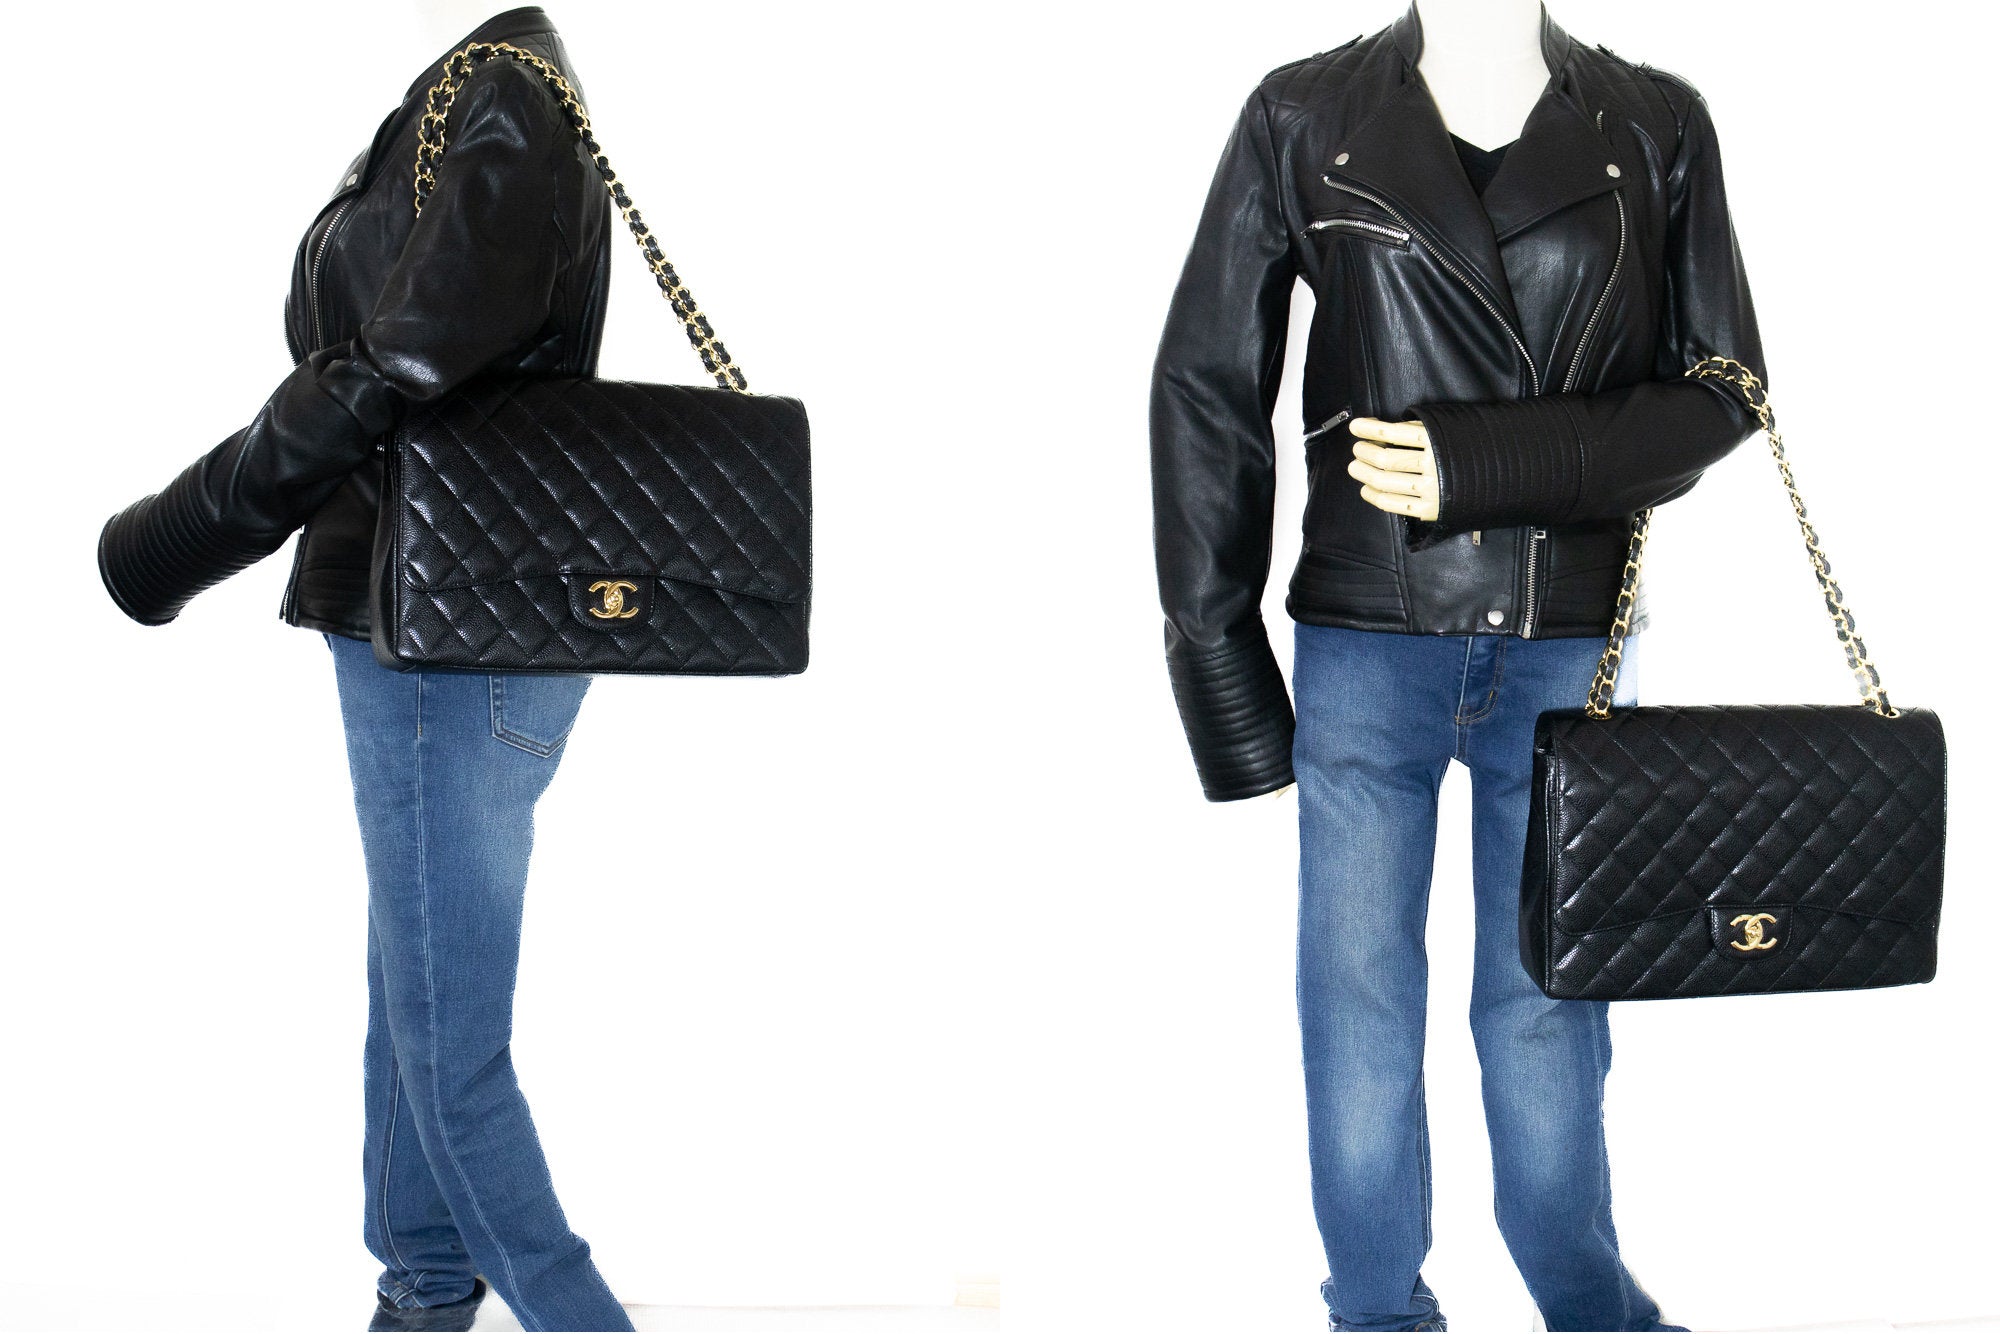 Maxi classic handbag, Grained calfskin & gold-tone metal, black — Fashion |  CHANEL